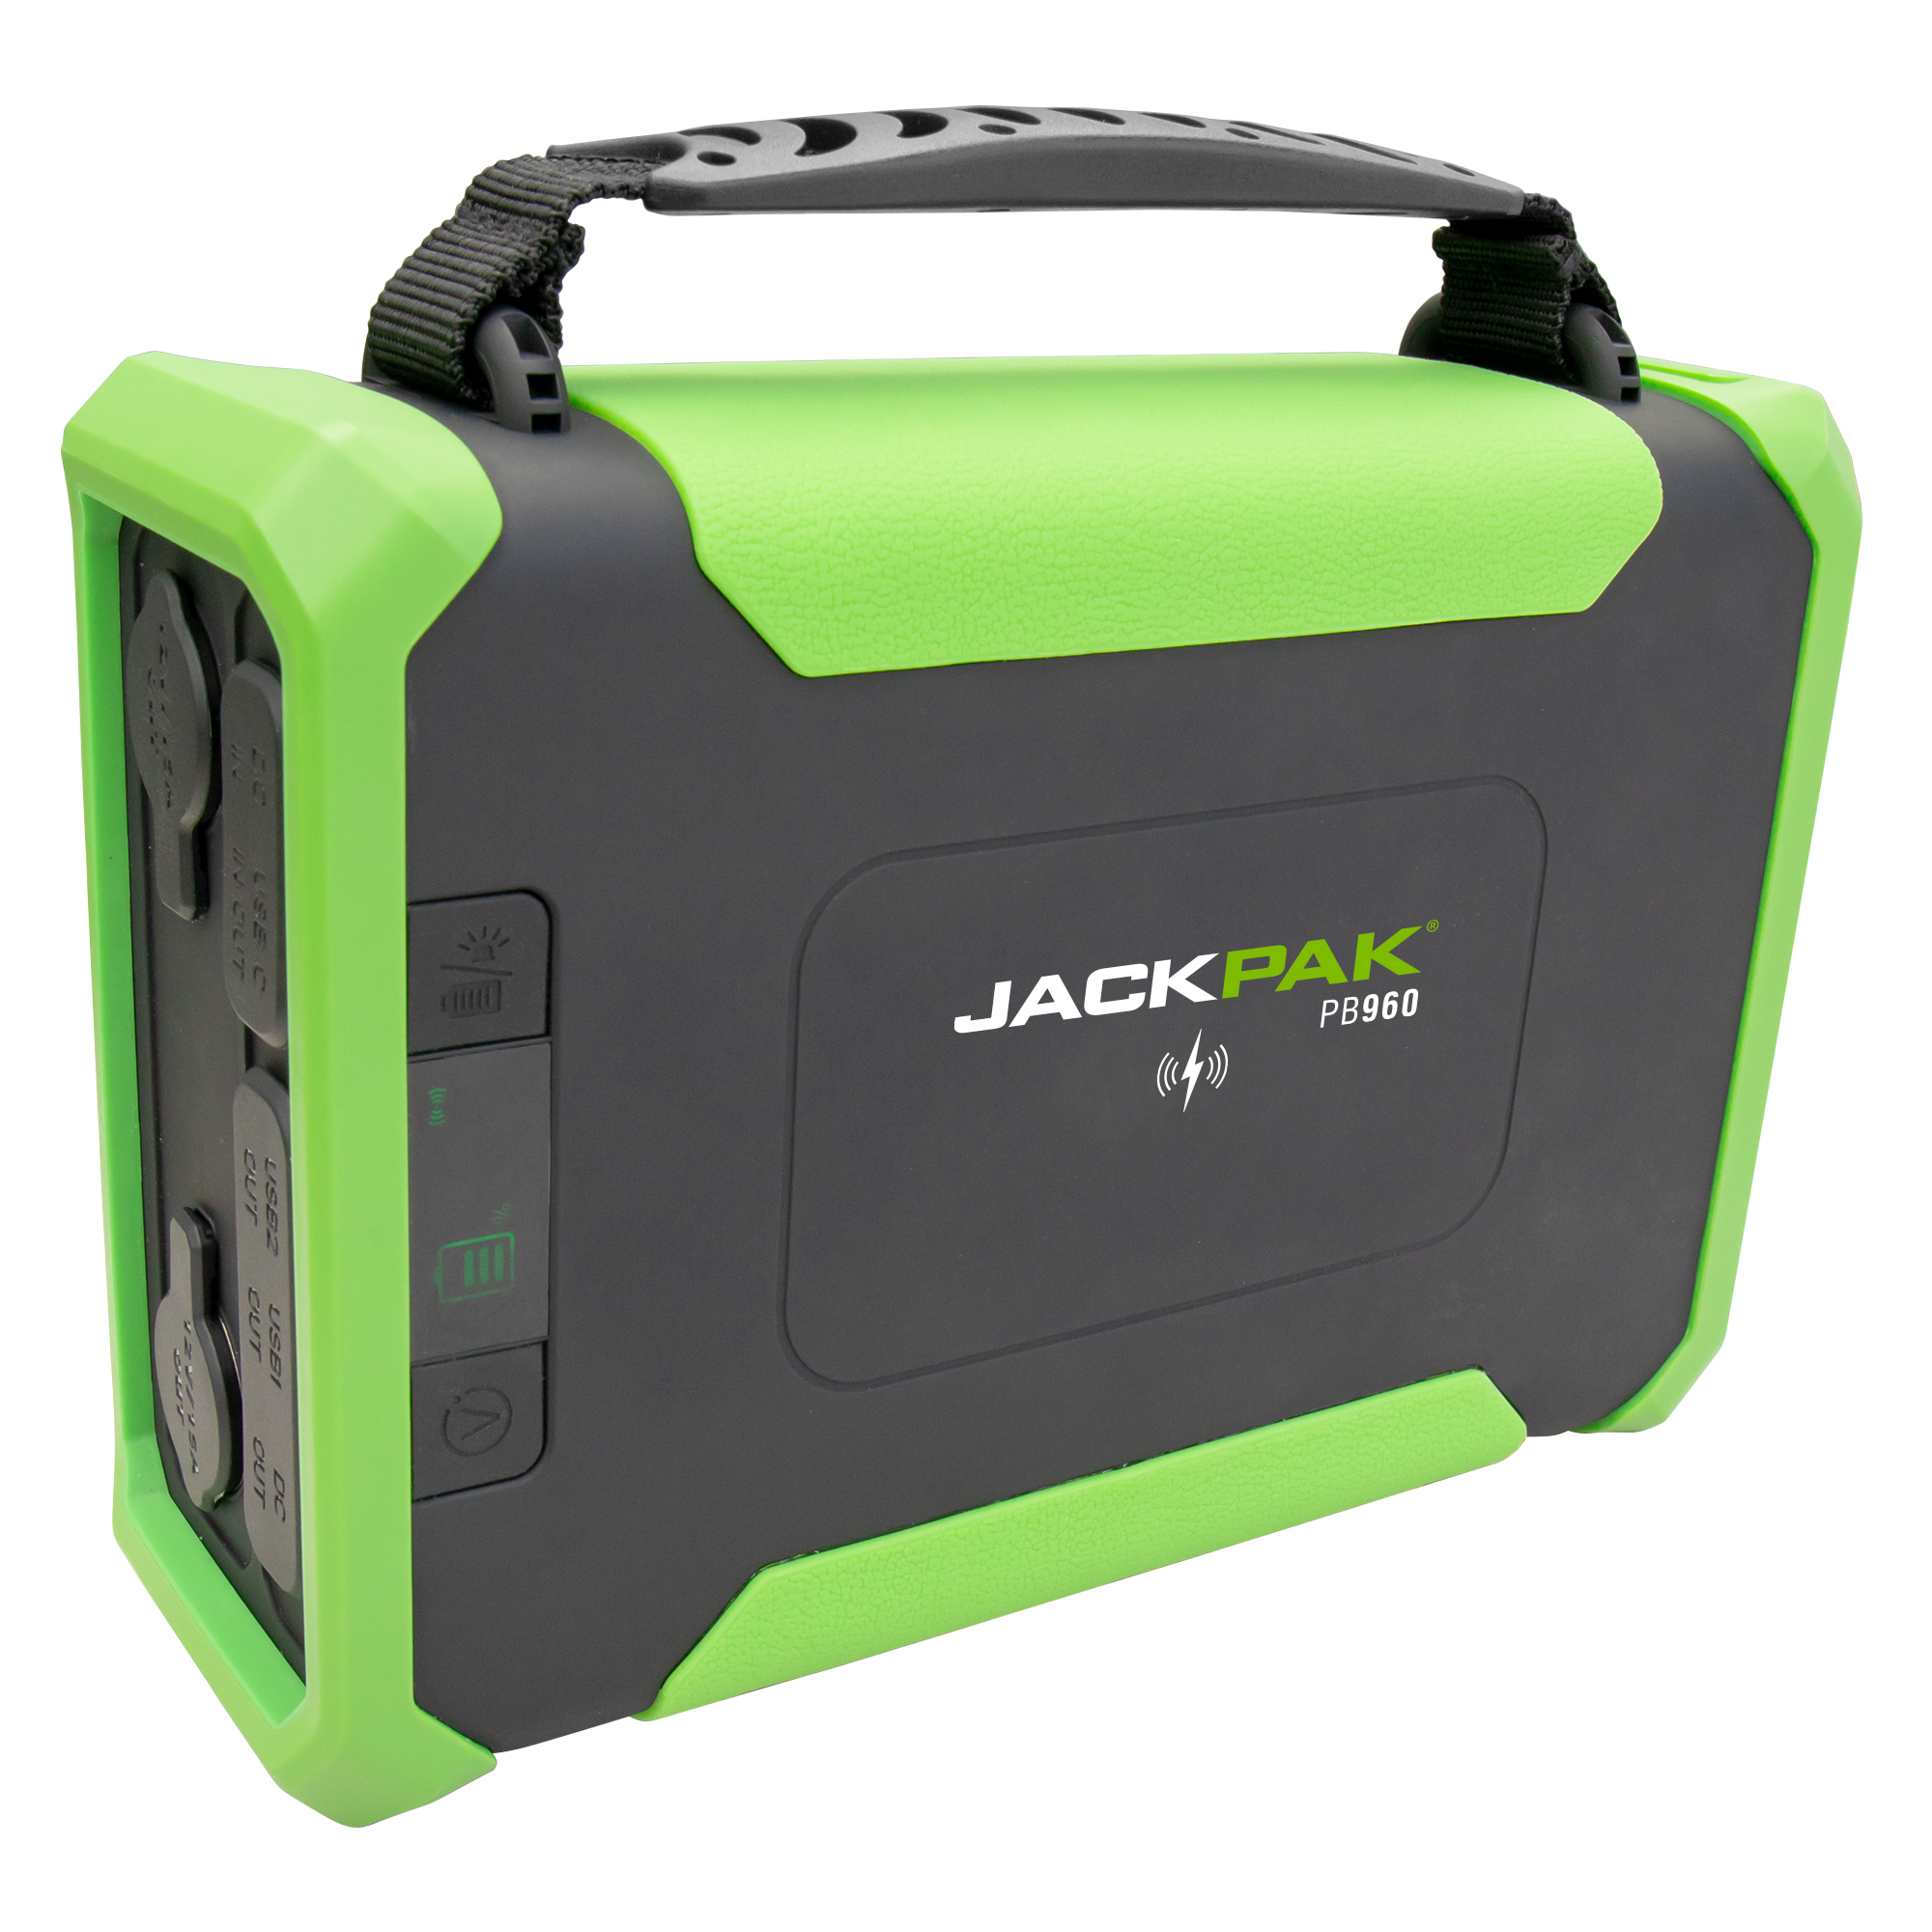 JackPak, PB960 is a high-capacity power bank, Amps 5 Volts Multi, Model PB960